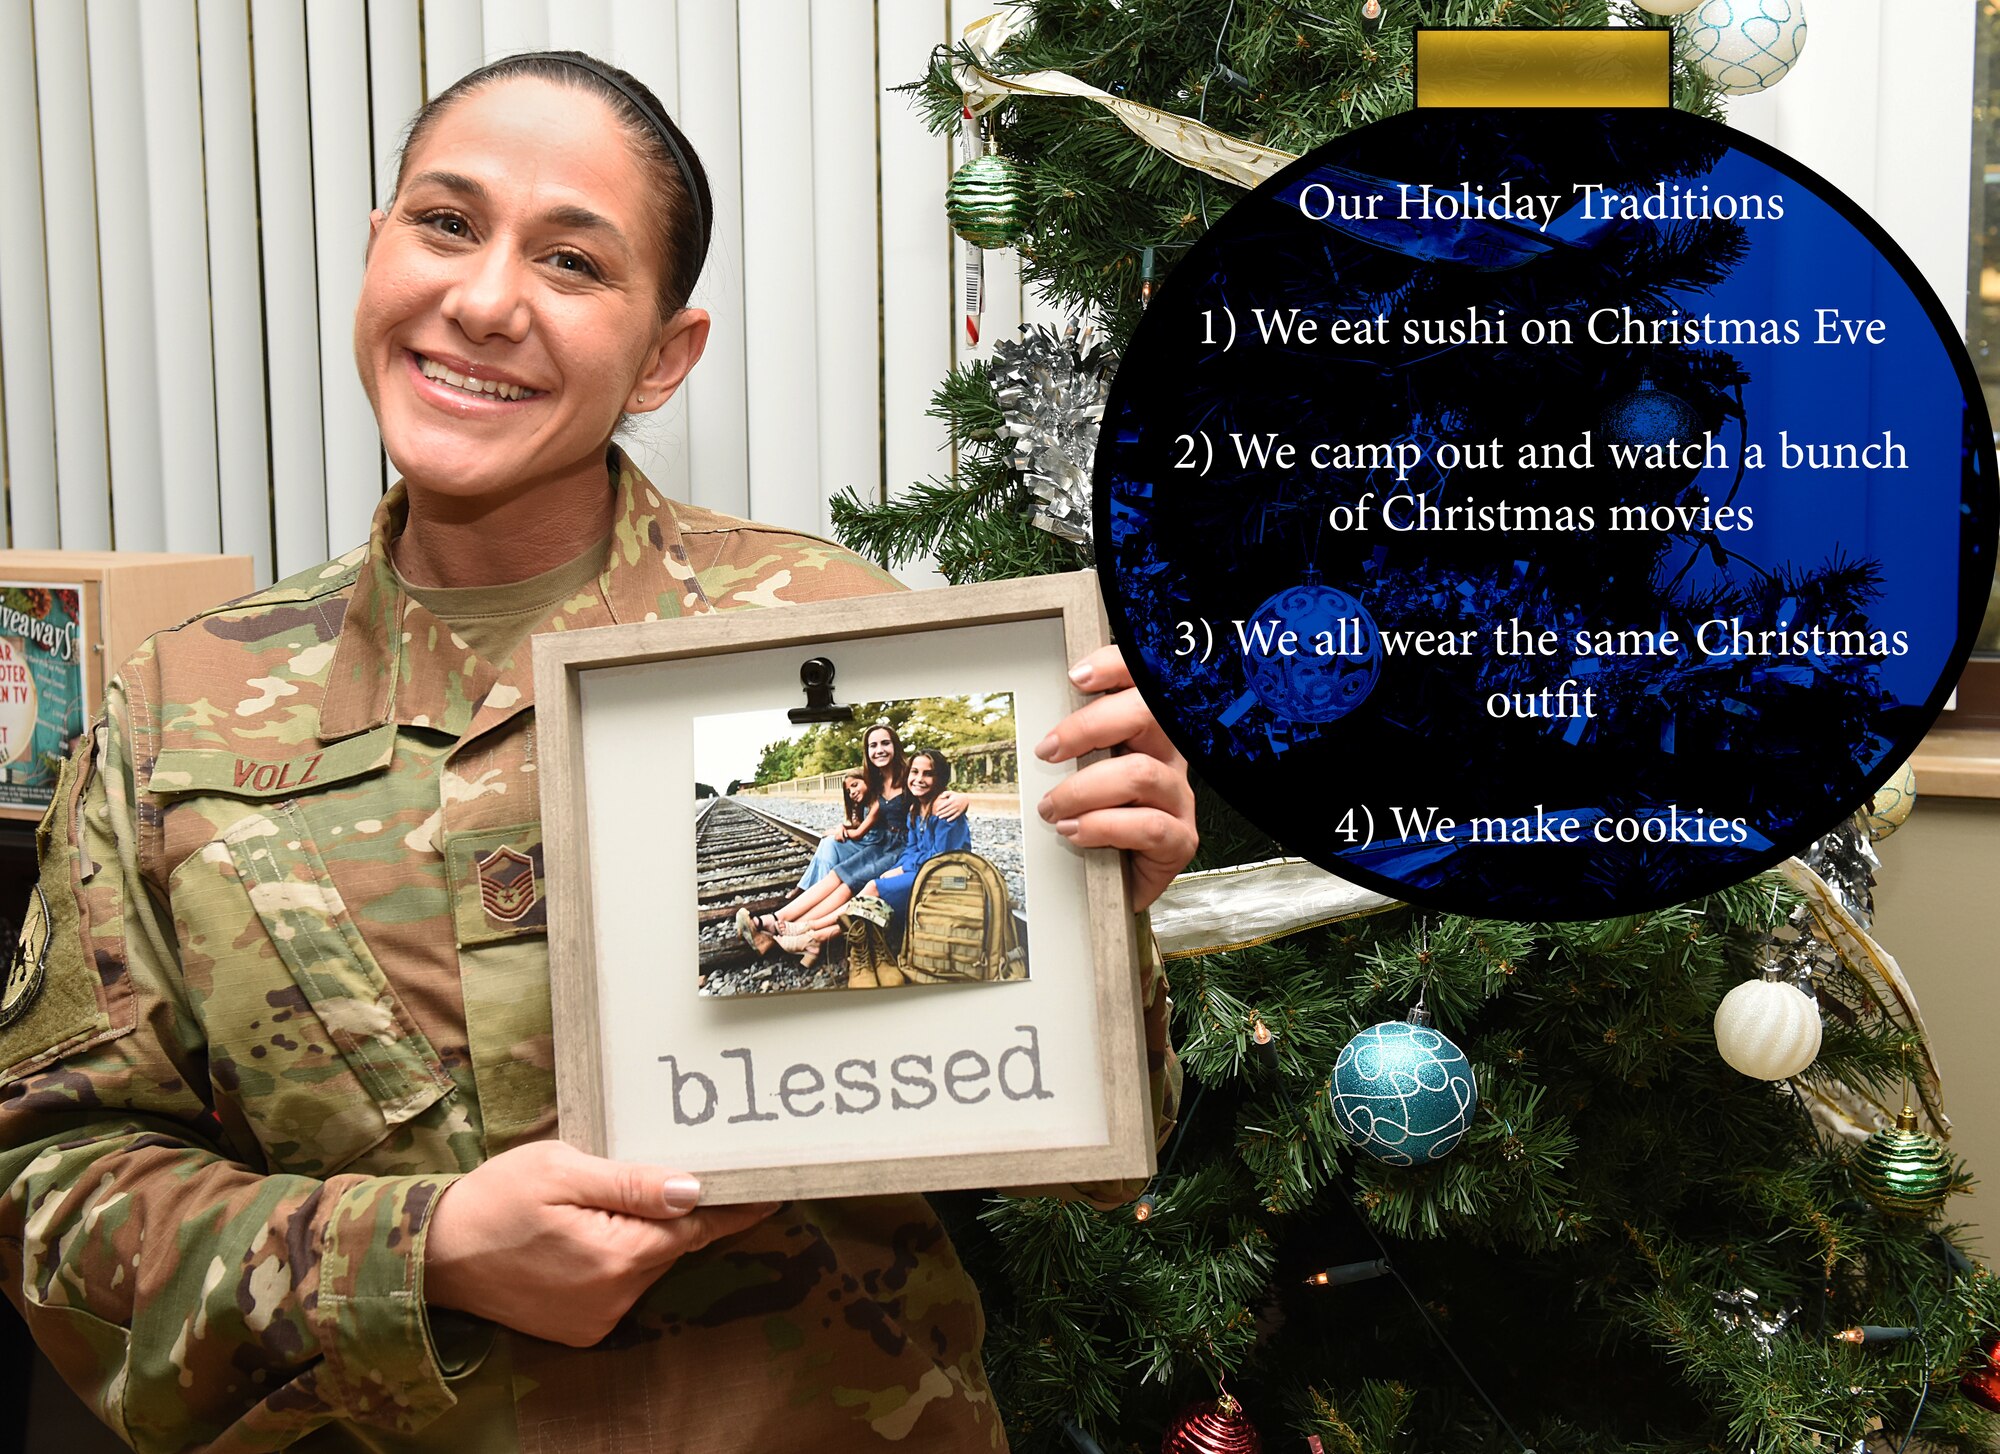 Airman holds up Christmas family photos.